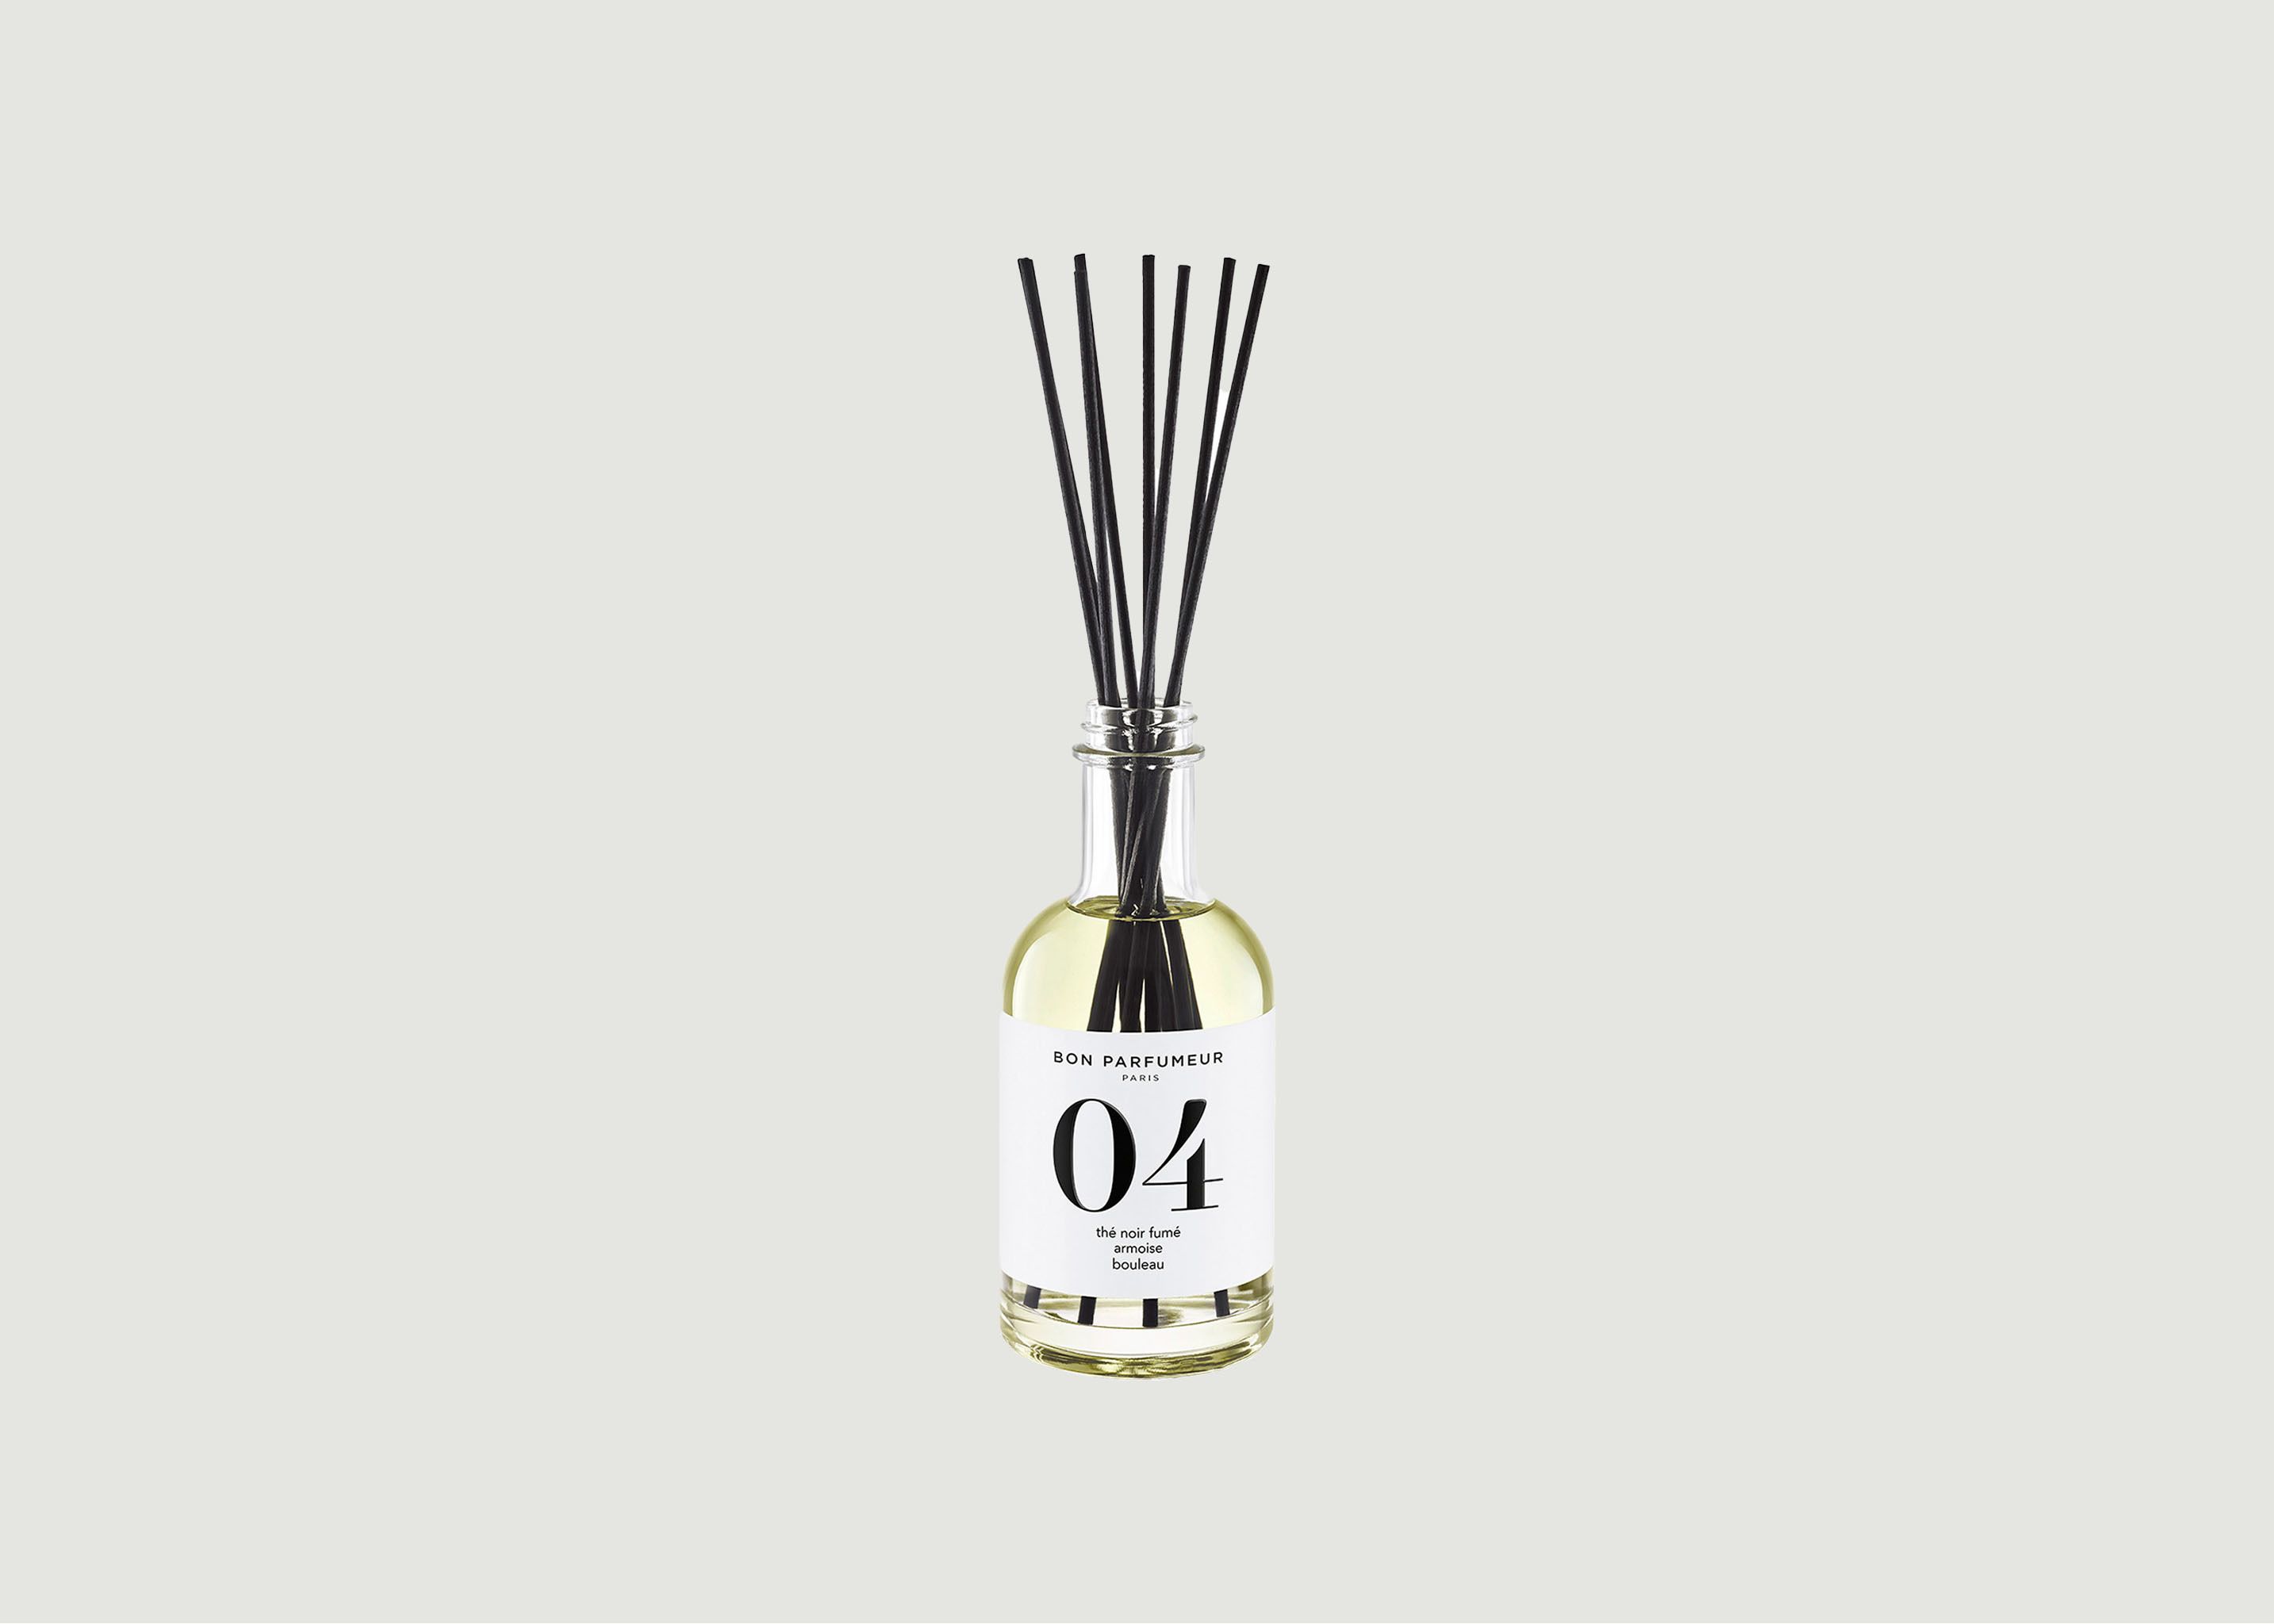 Home Fragrance Diffuser 04 : Smoked Black Tea, Mugwort, Birch - Bon Parfumeur